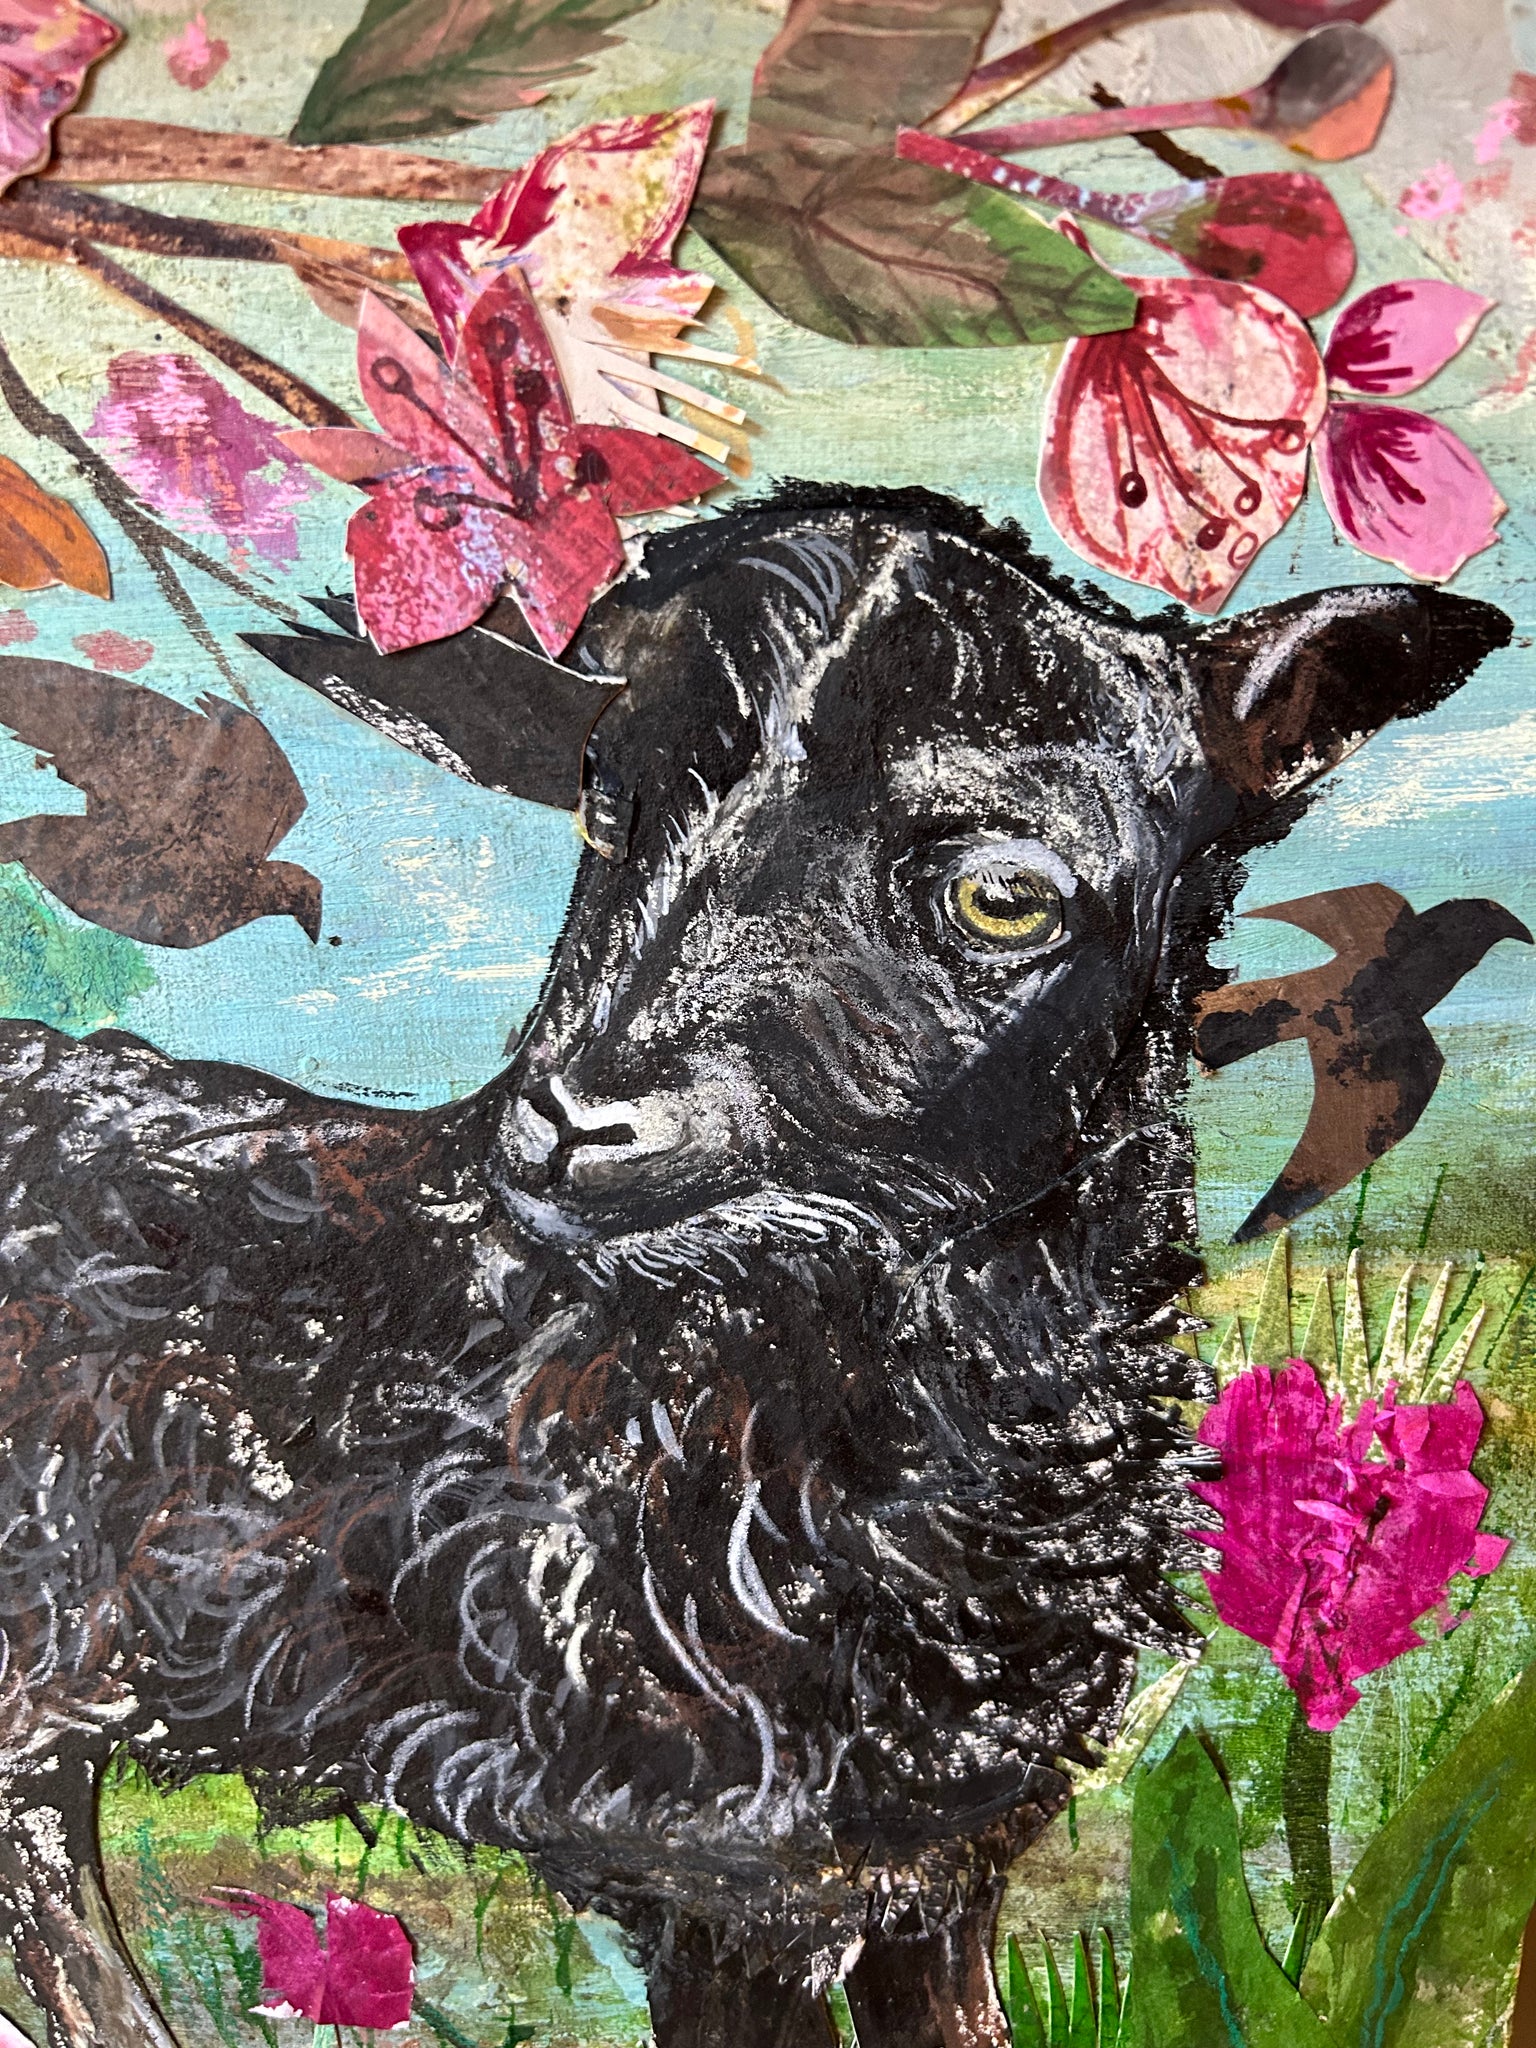 Spring Lamb- Original Mixed Media Painting on board.